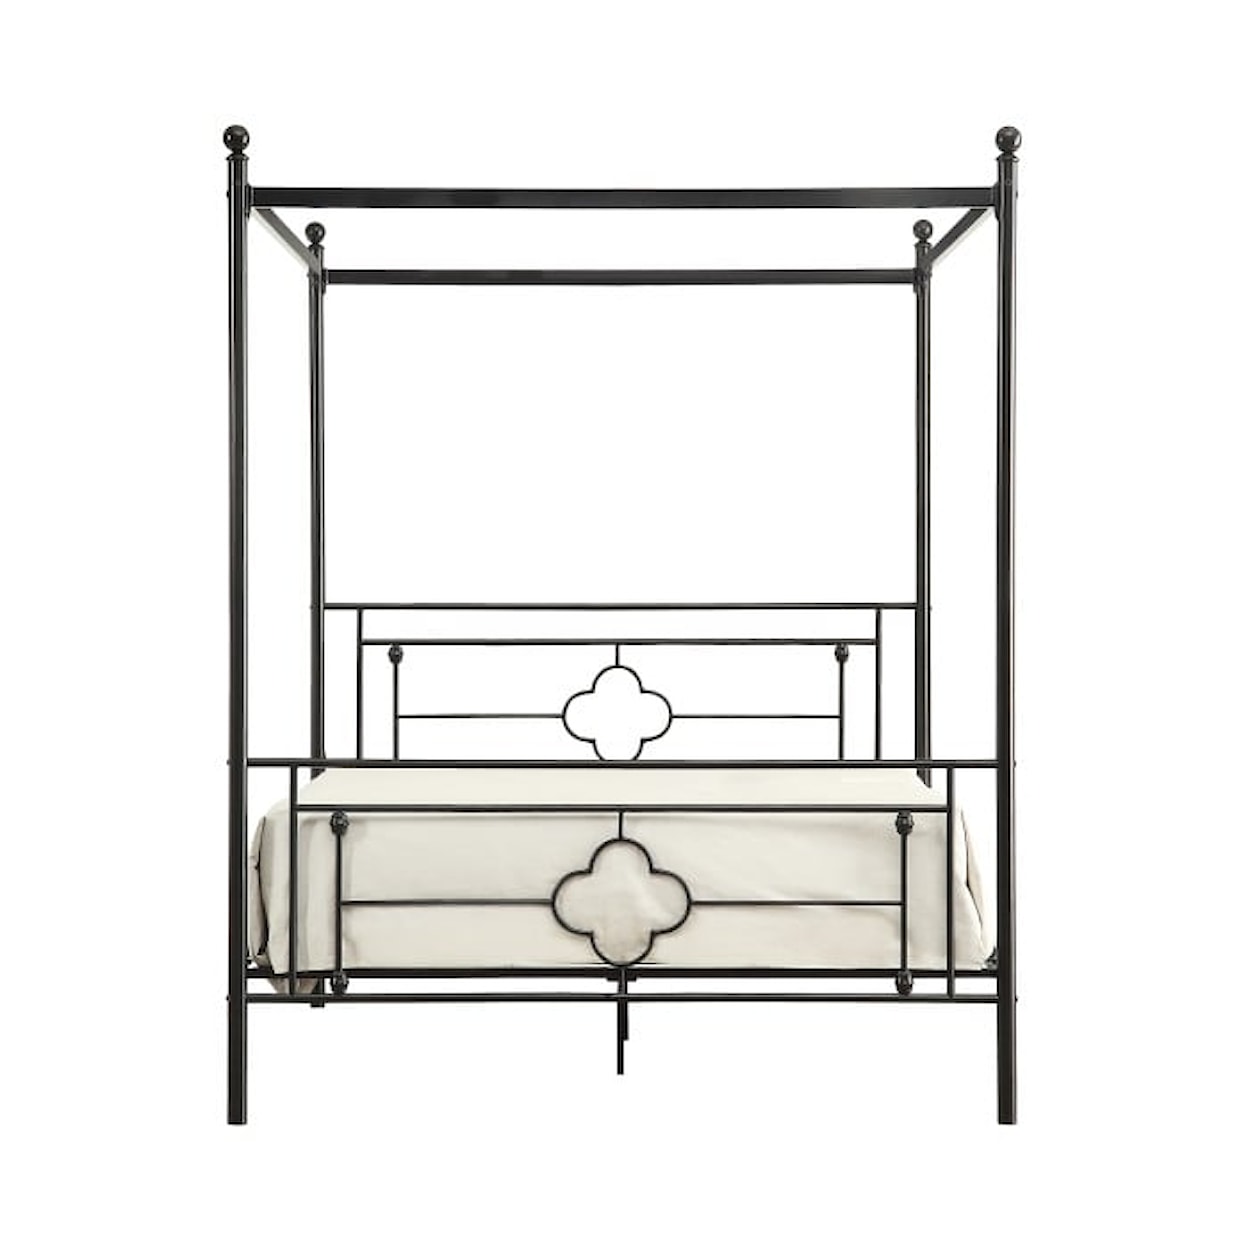 Homelegance Furniture Hosta Queen Platform Bed with Canopy